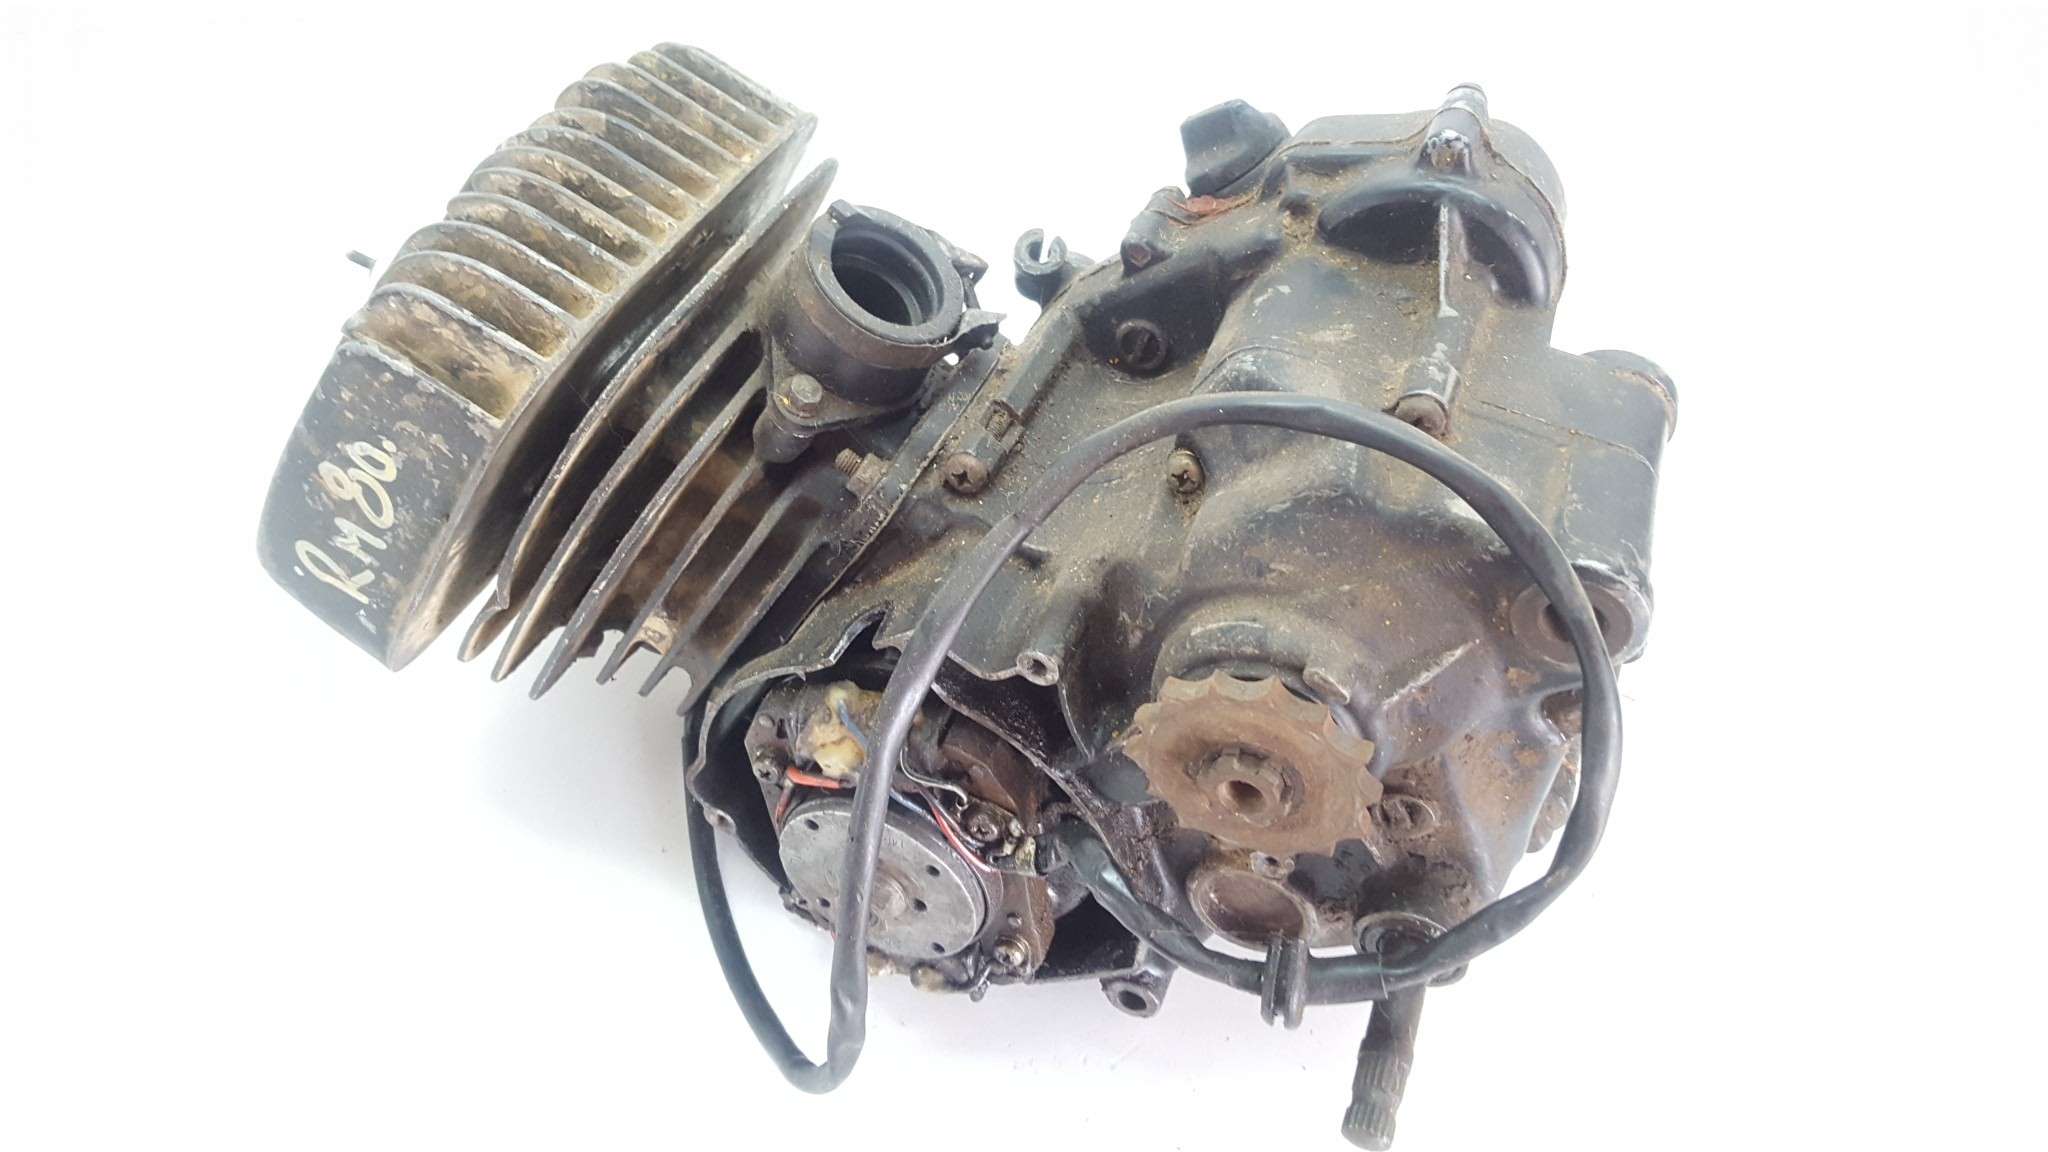 Motor Engine Suzuki RM80 79cc Suspected 1982 Bottom Top End Cases Transmission